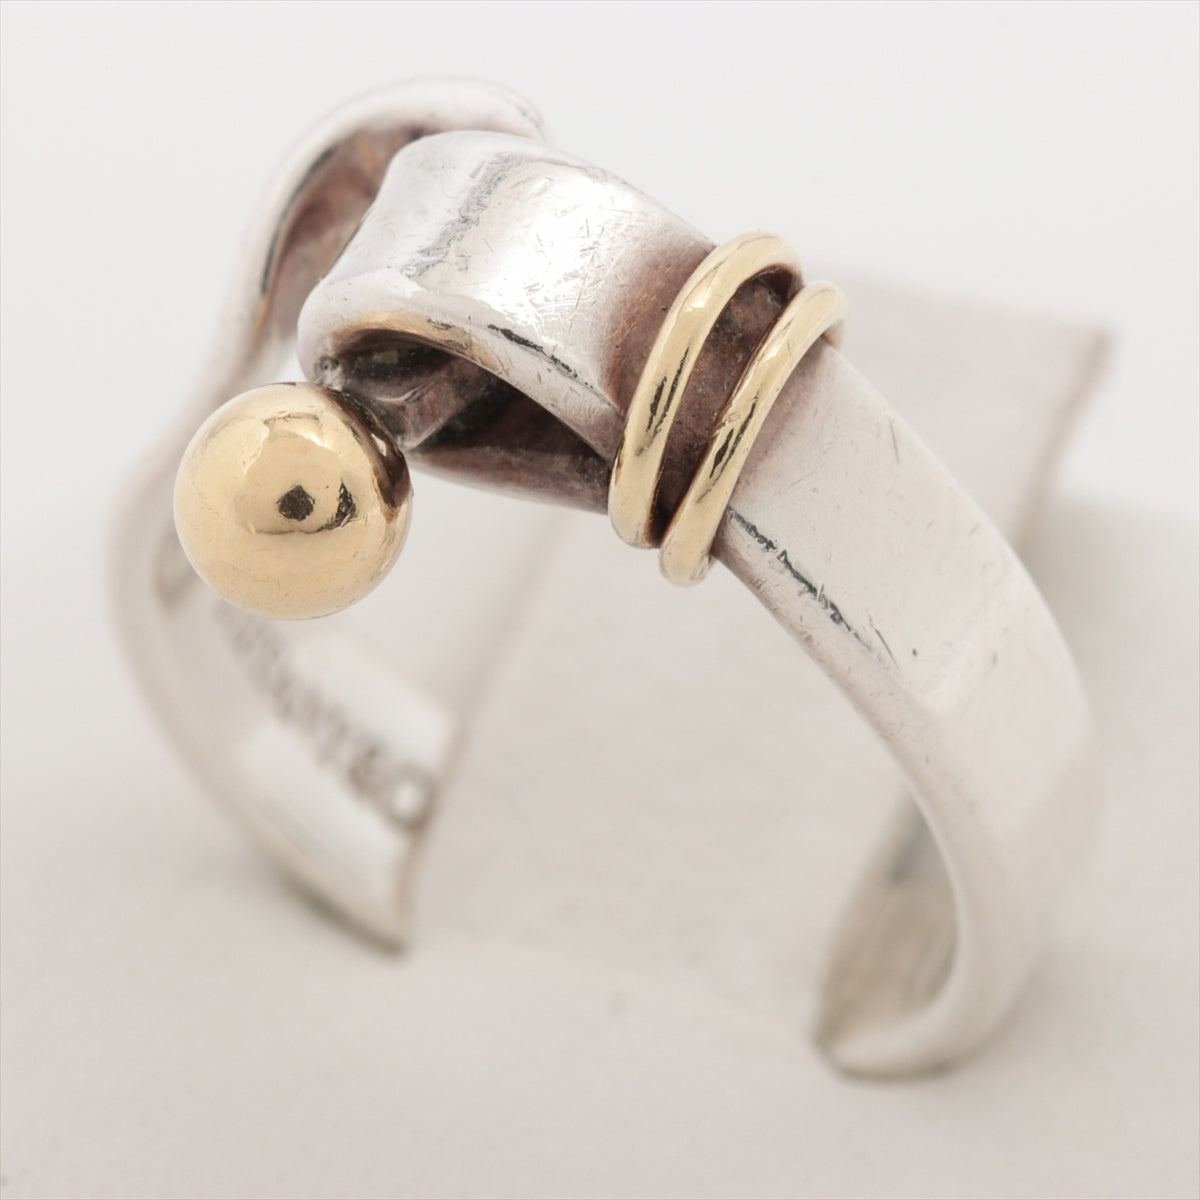 Tiffany combination hook & eye rings 925 4.1g Gold × Silver